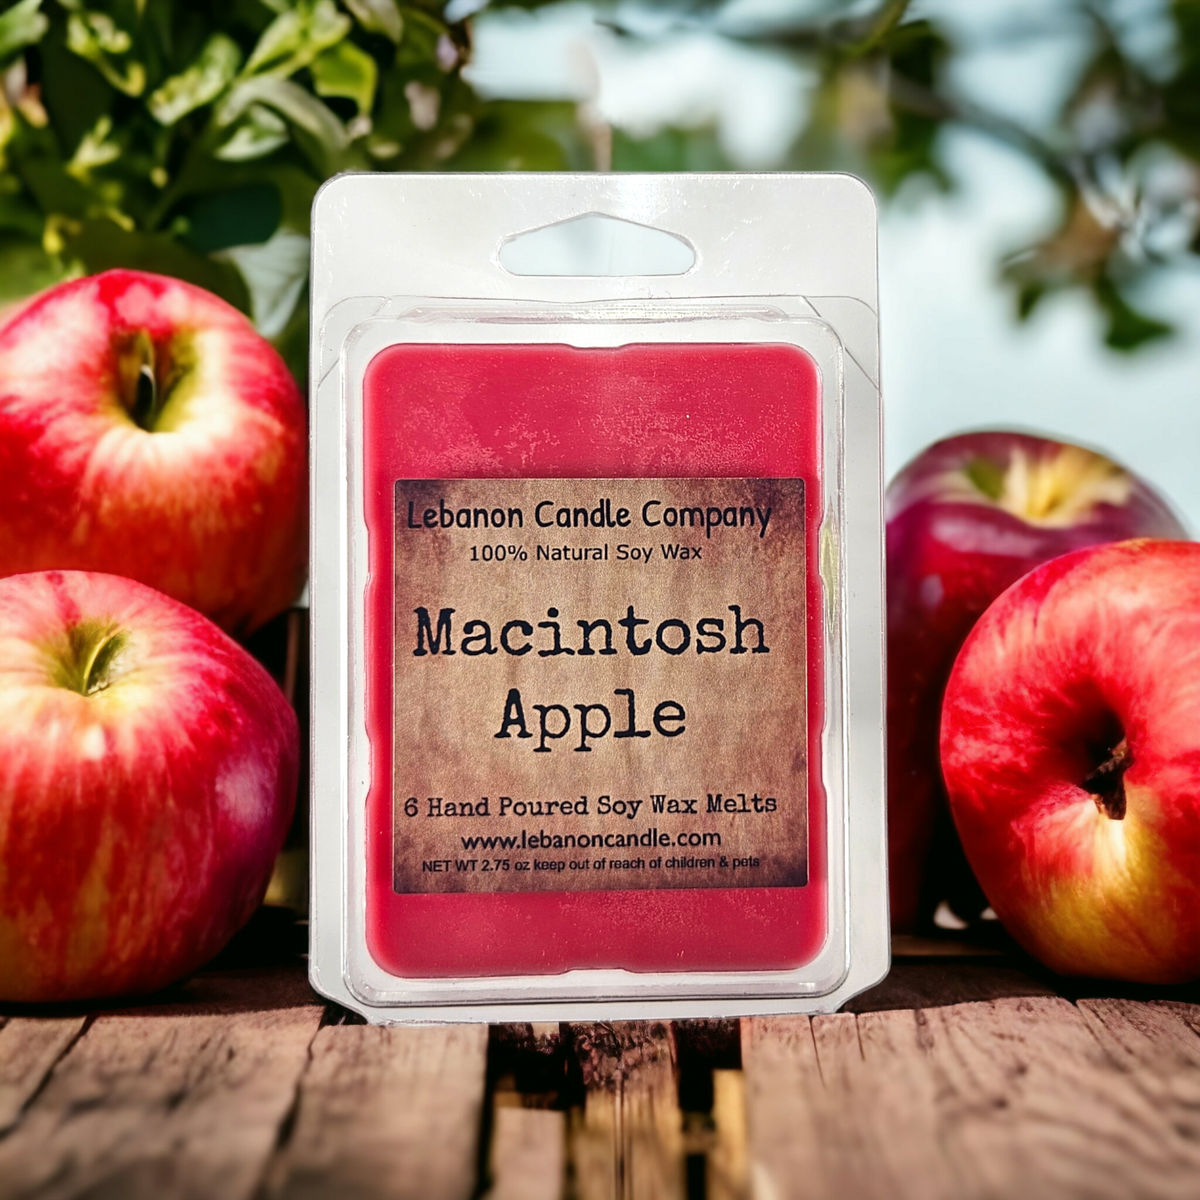 Macintosh Apple – Lebanon Candle Company